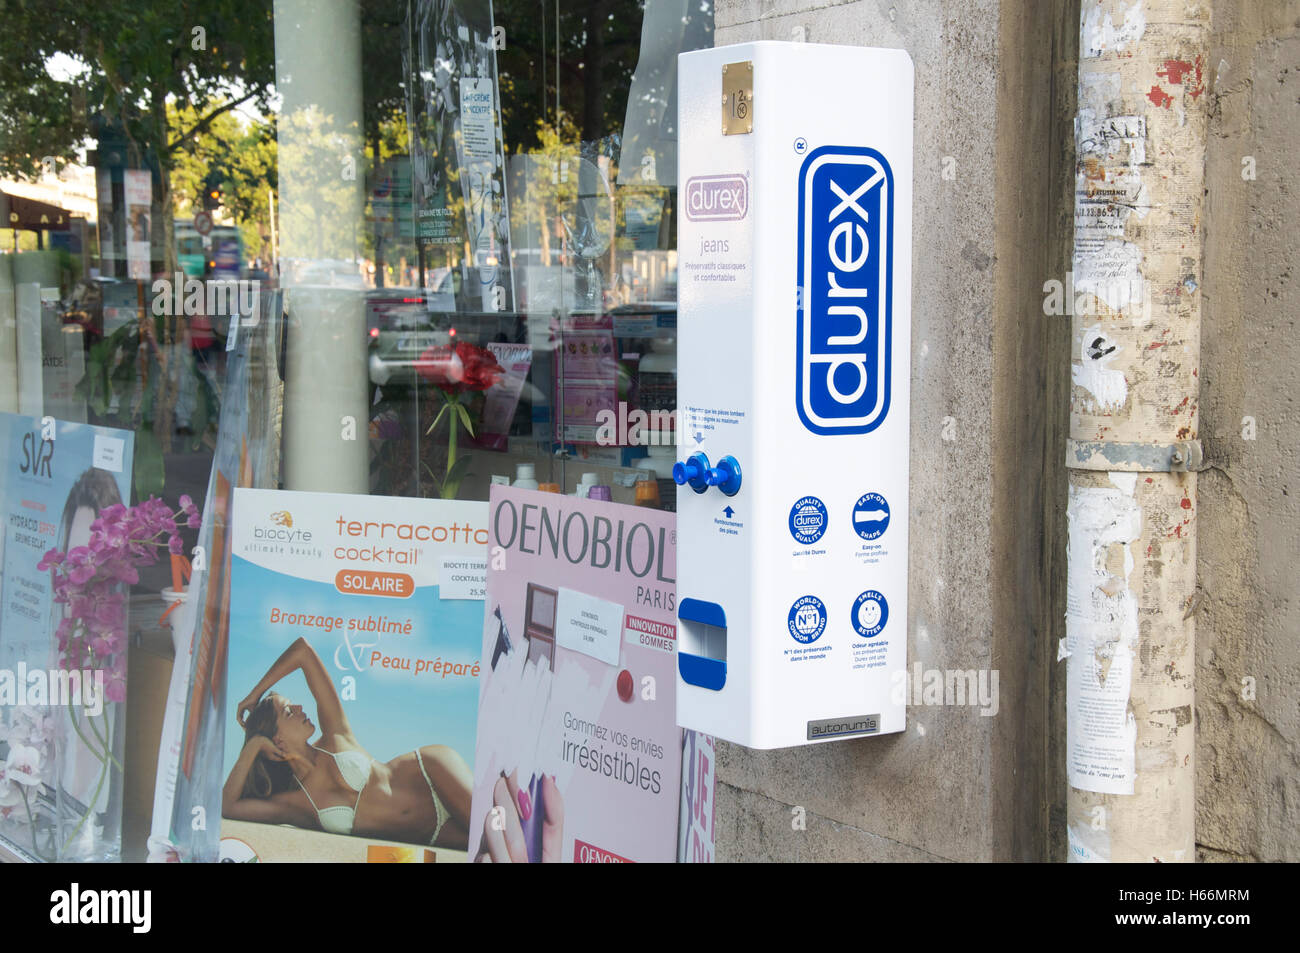 Contraception, chemist shop. A wall mounted vending machine dispensing Durex condoms outside a pharmacy on a Parisian street, Paris, France. Stock Photo